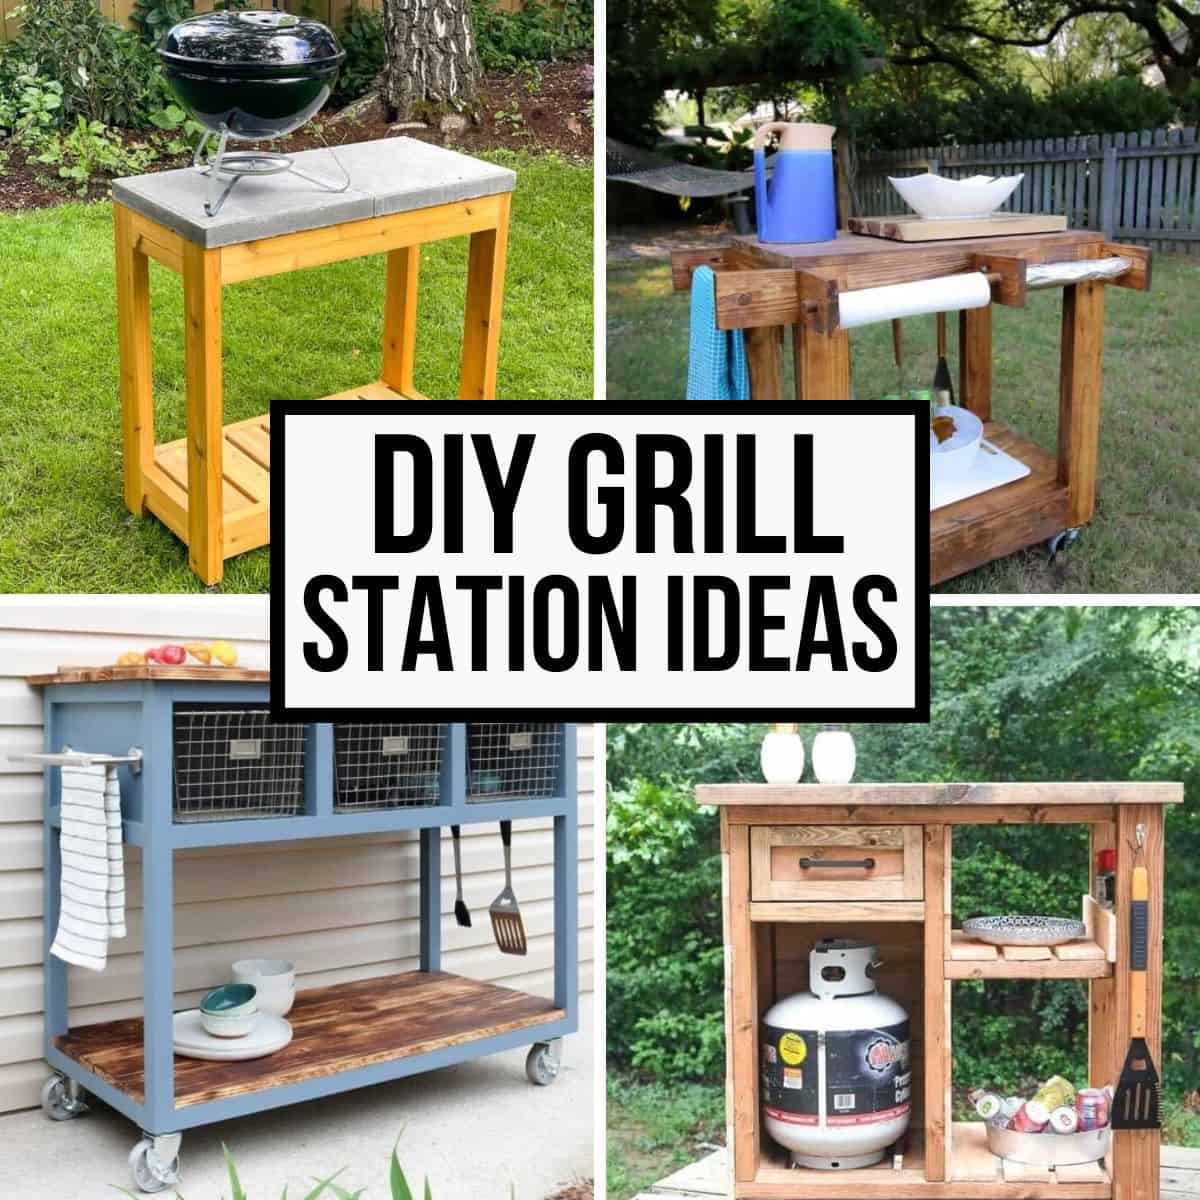 Outdoor Grill Station: 11 Inspiring Ideas & Designs